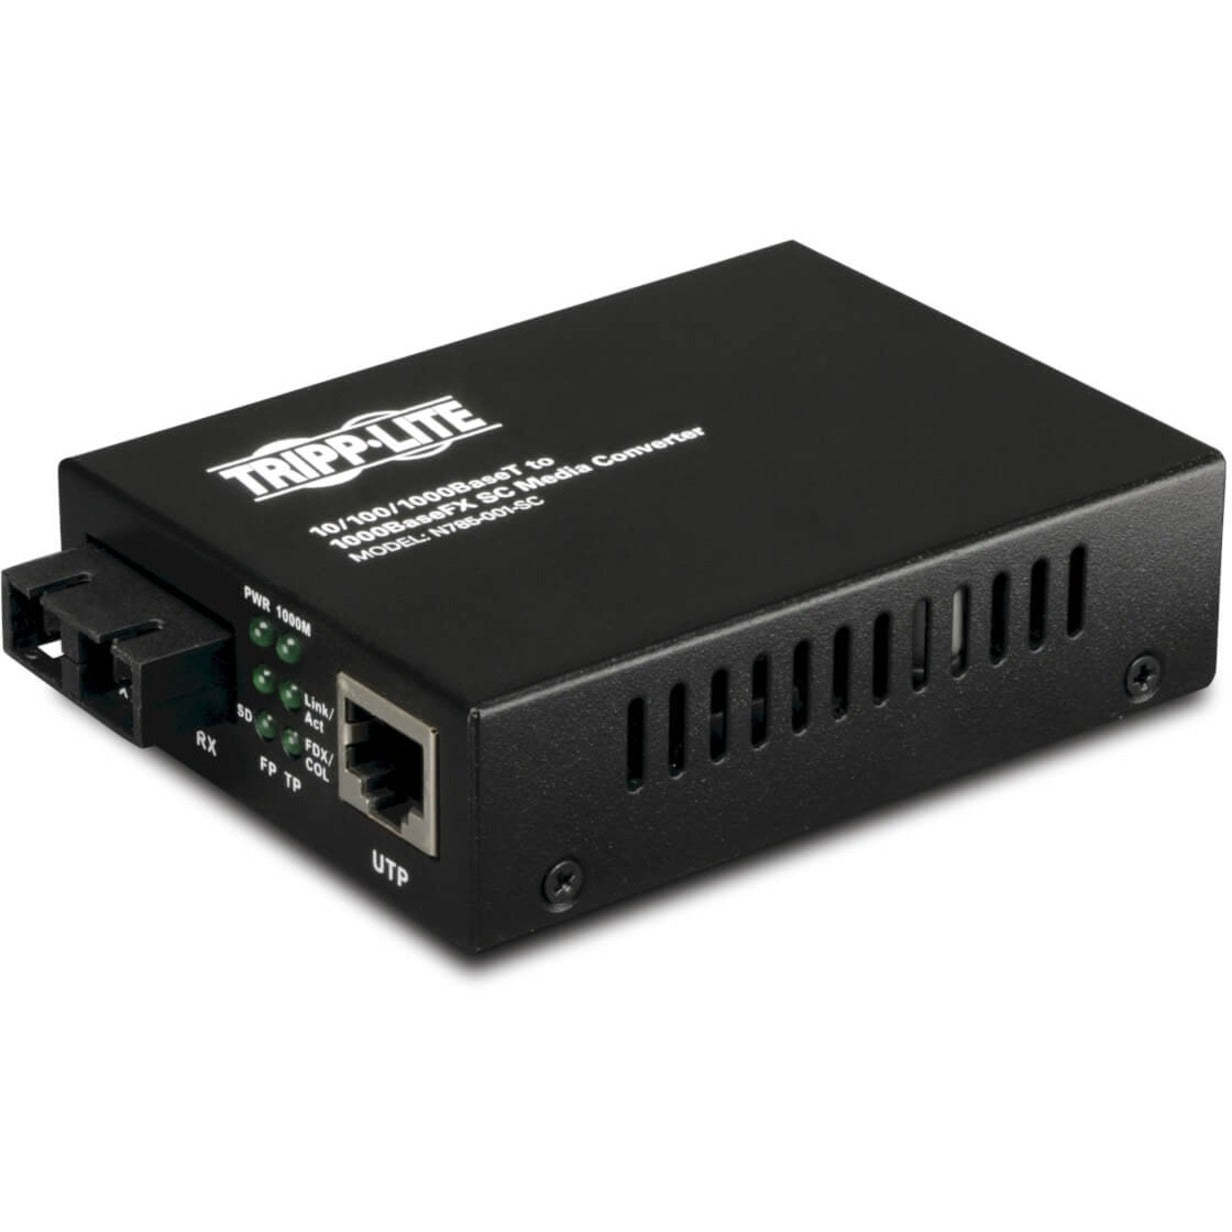 Tripp Lite N785-001-SC Gigabit Media Converter, 2-Year Warranty, RoHS Certified